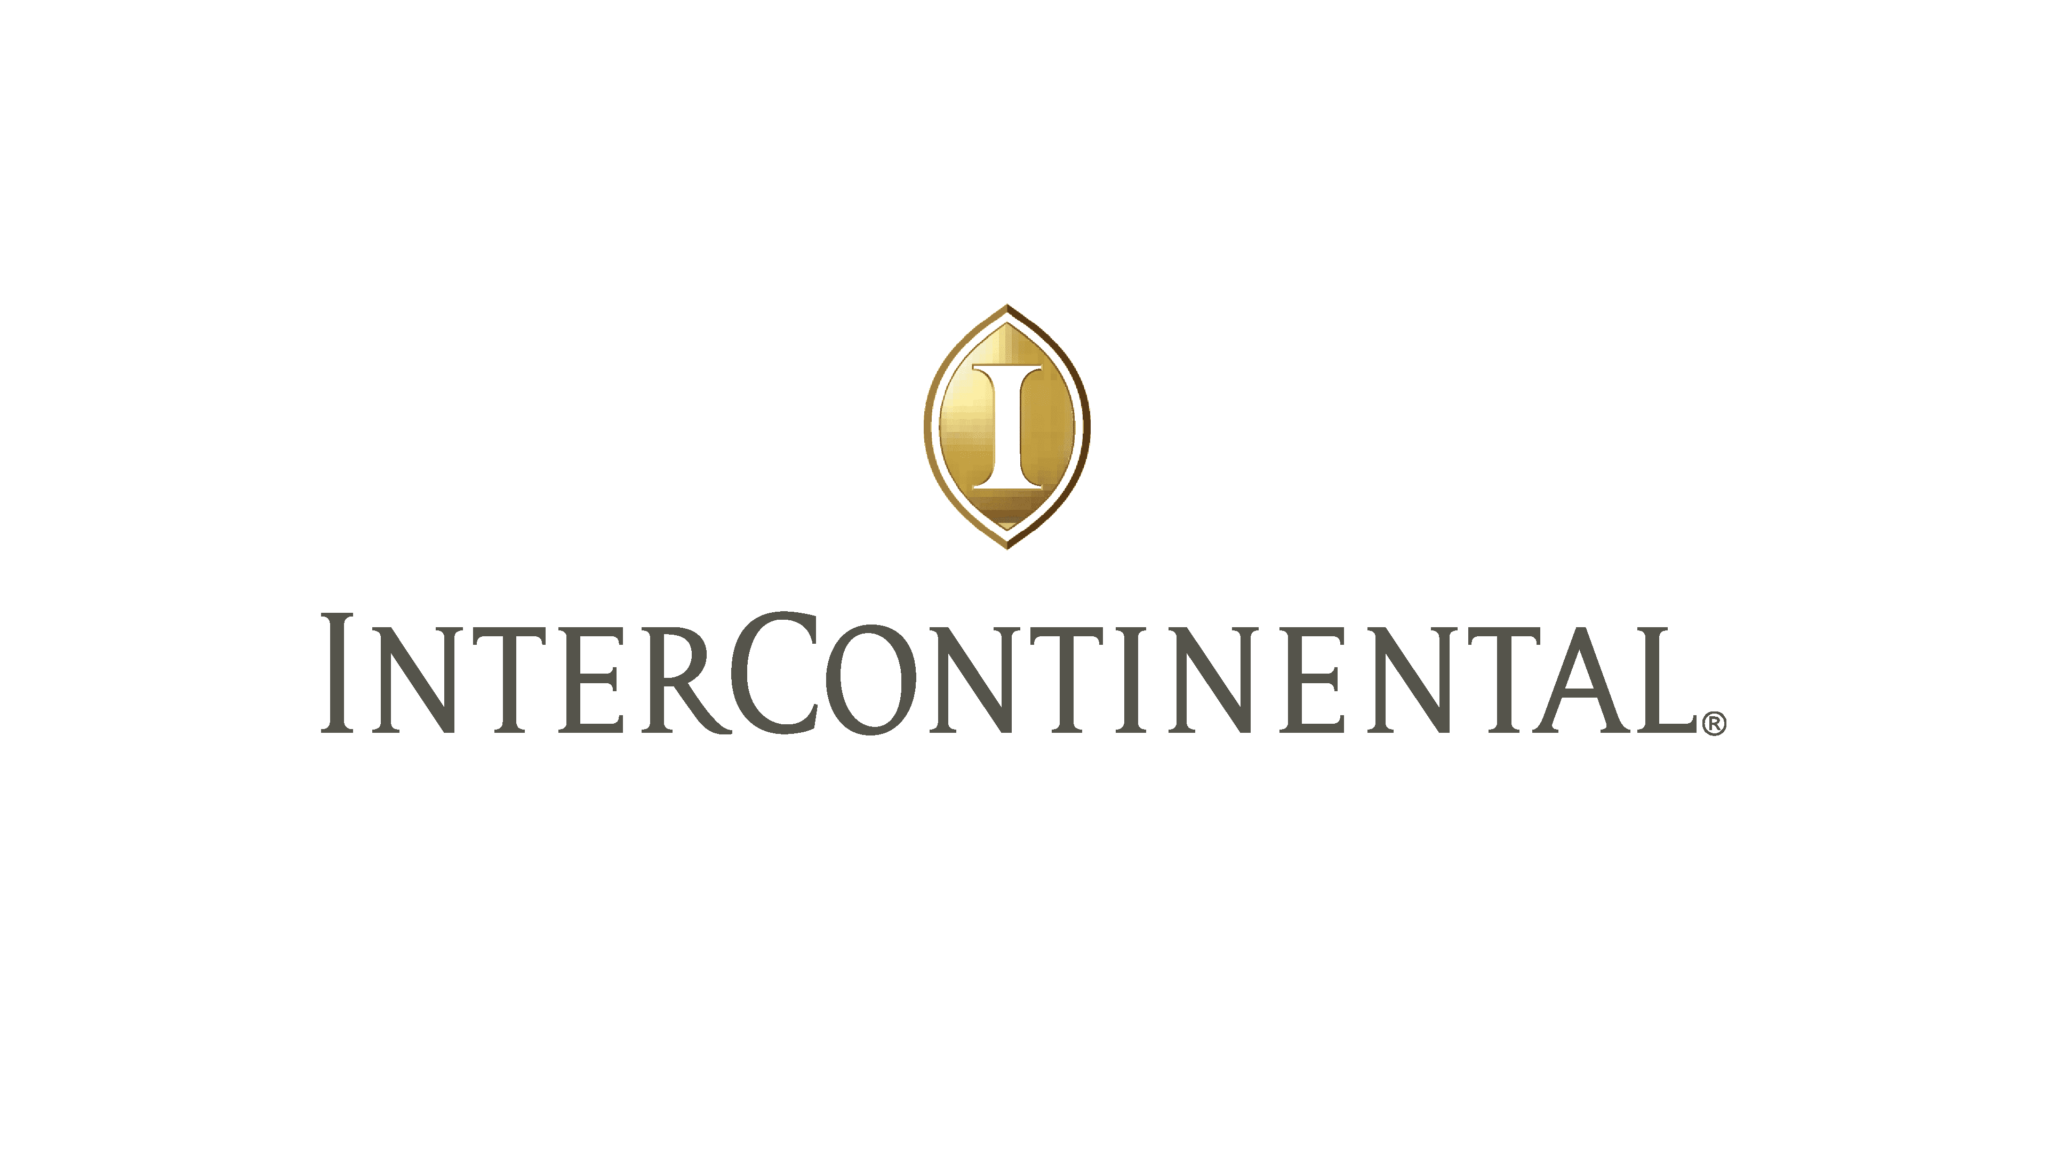 InterContinental Logo 2048x1152 